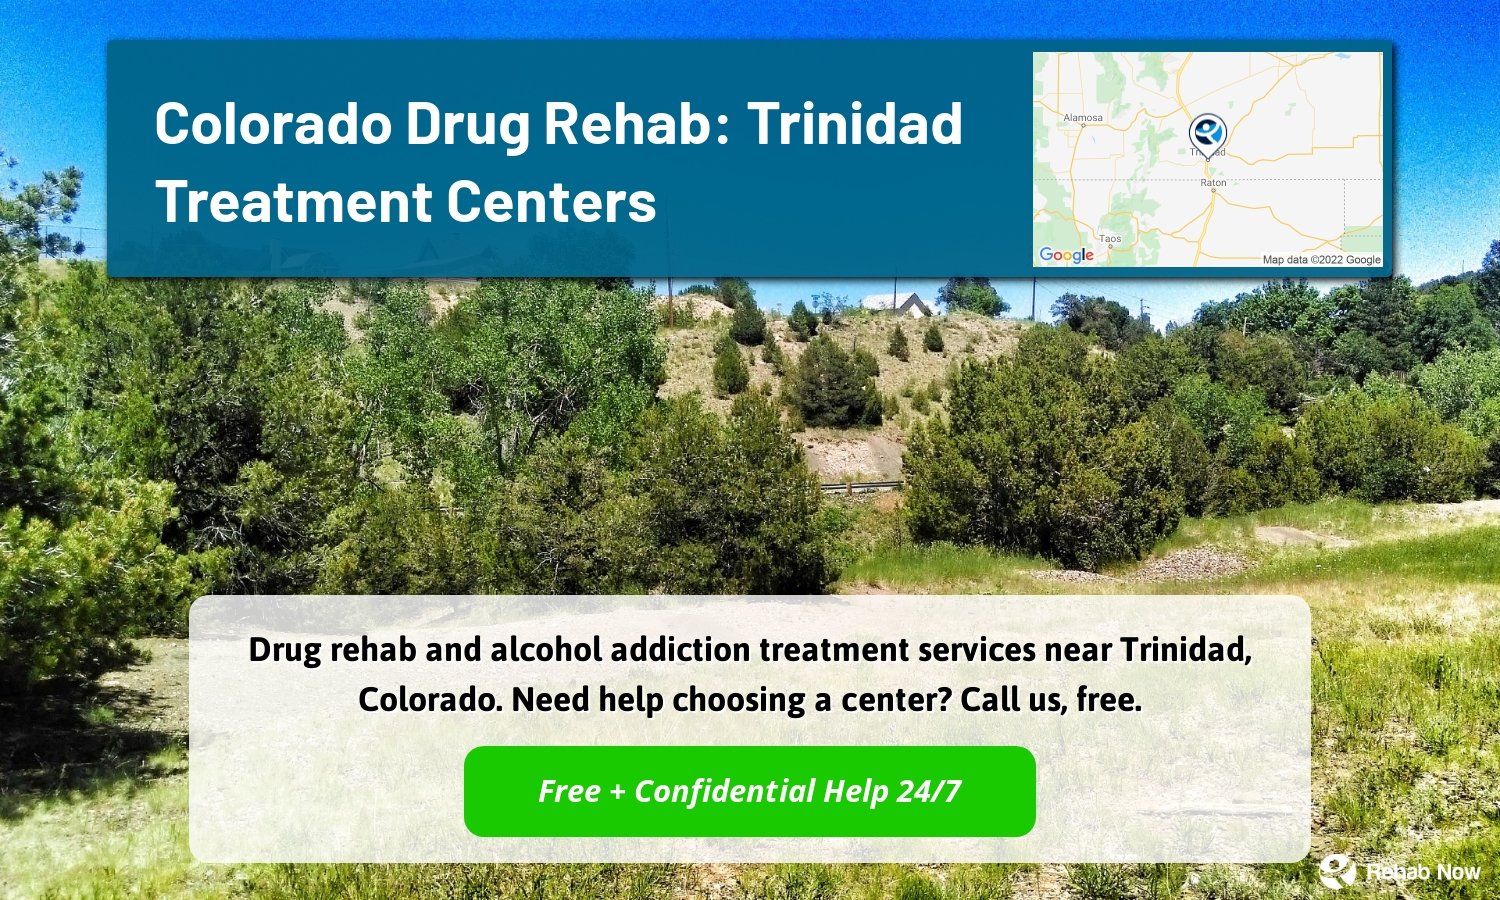 Drug rehab and alcohol addiction treatment services near Trinidad, Colorado. Need help choosing a center? Call us, free.